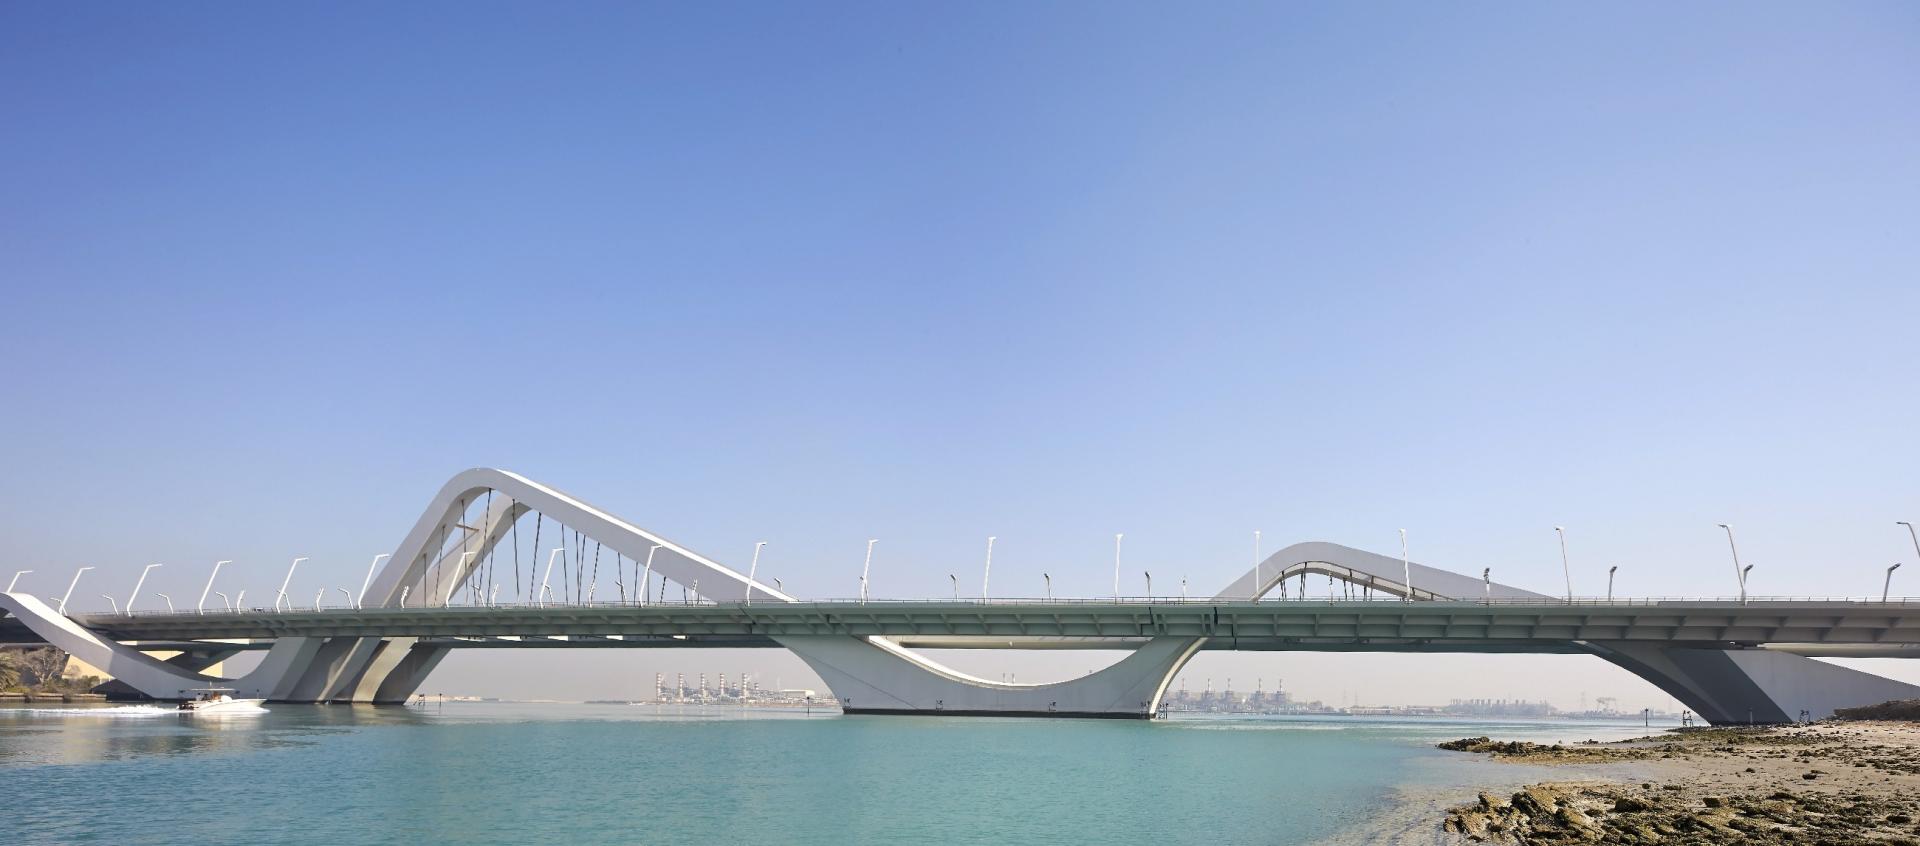 Sheikh Zayed Bridge Construction and Architecture by Zaha Hadid_ (7)